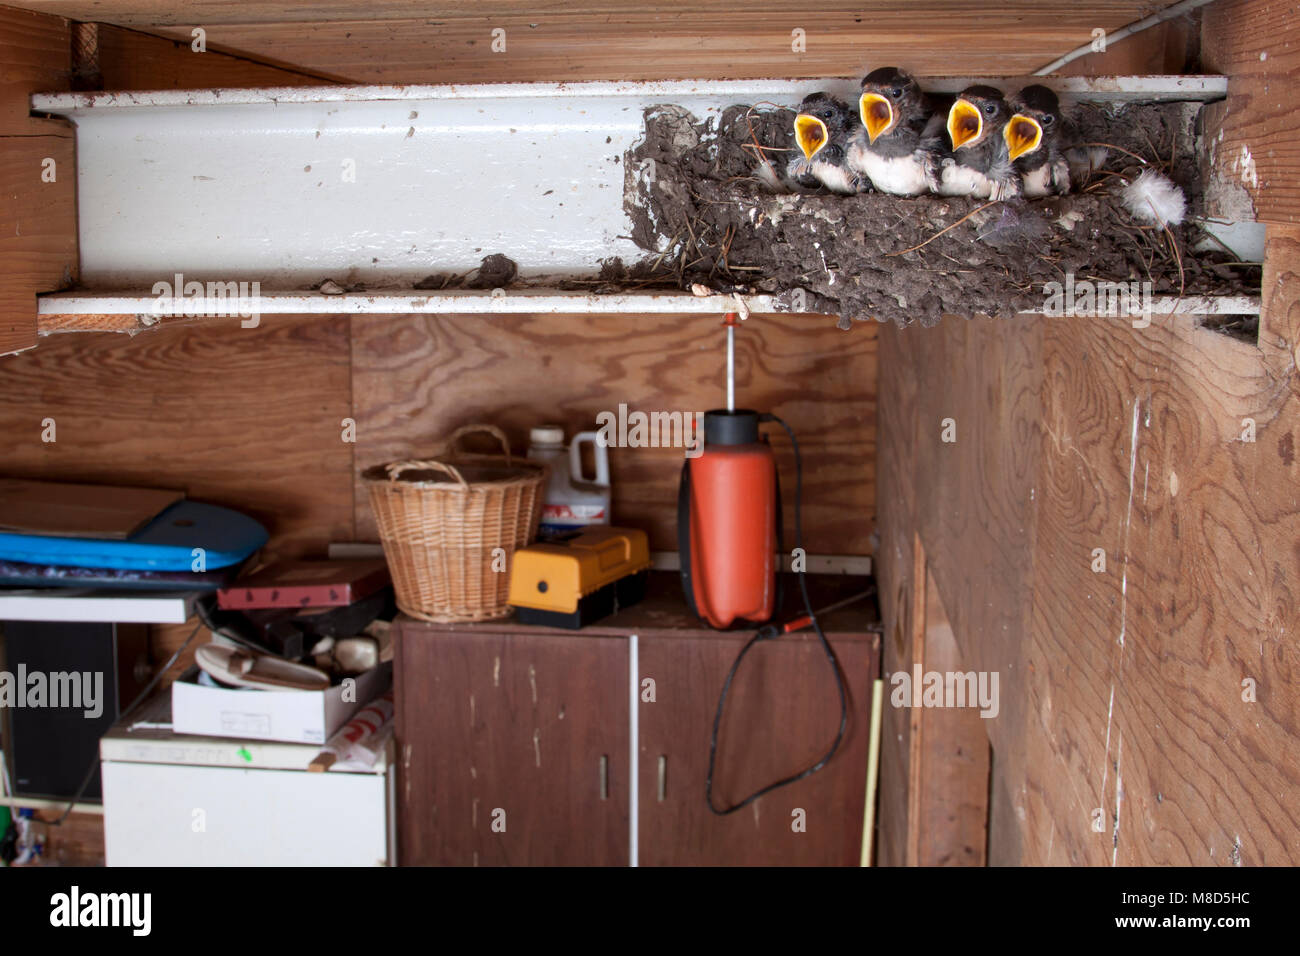 Boerenzwaluw jongen roepend in nest in schuur; Barn Swallow chicks calling in nest in barn Stock Photo